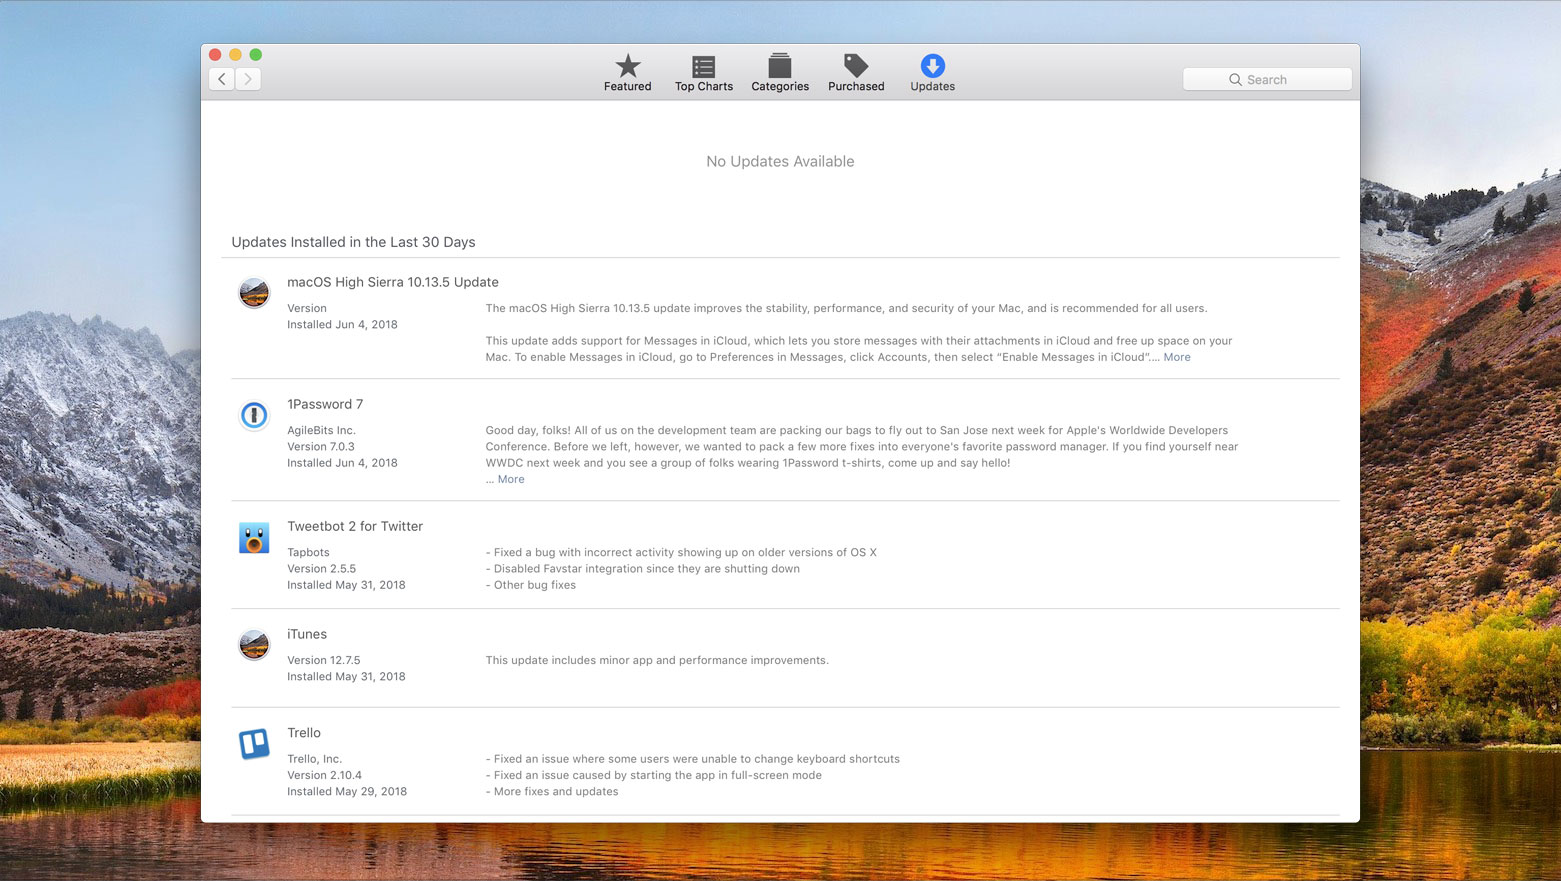 See Status Of Mac Software Update